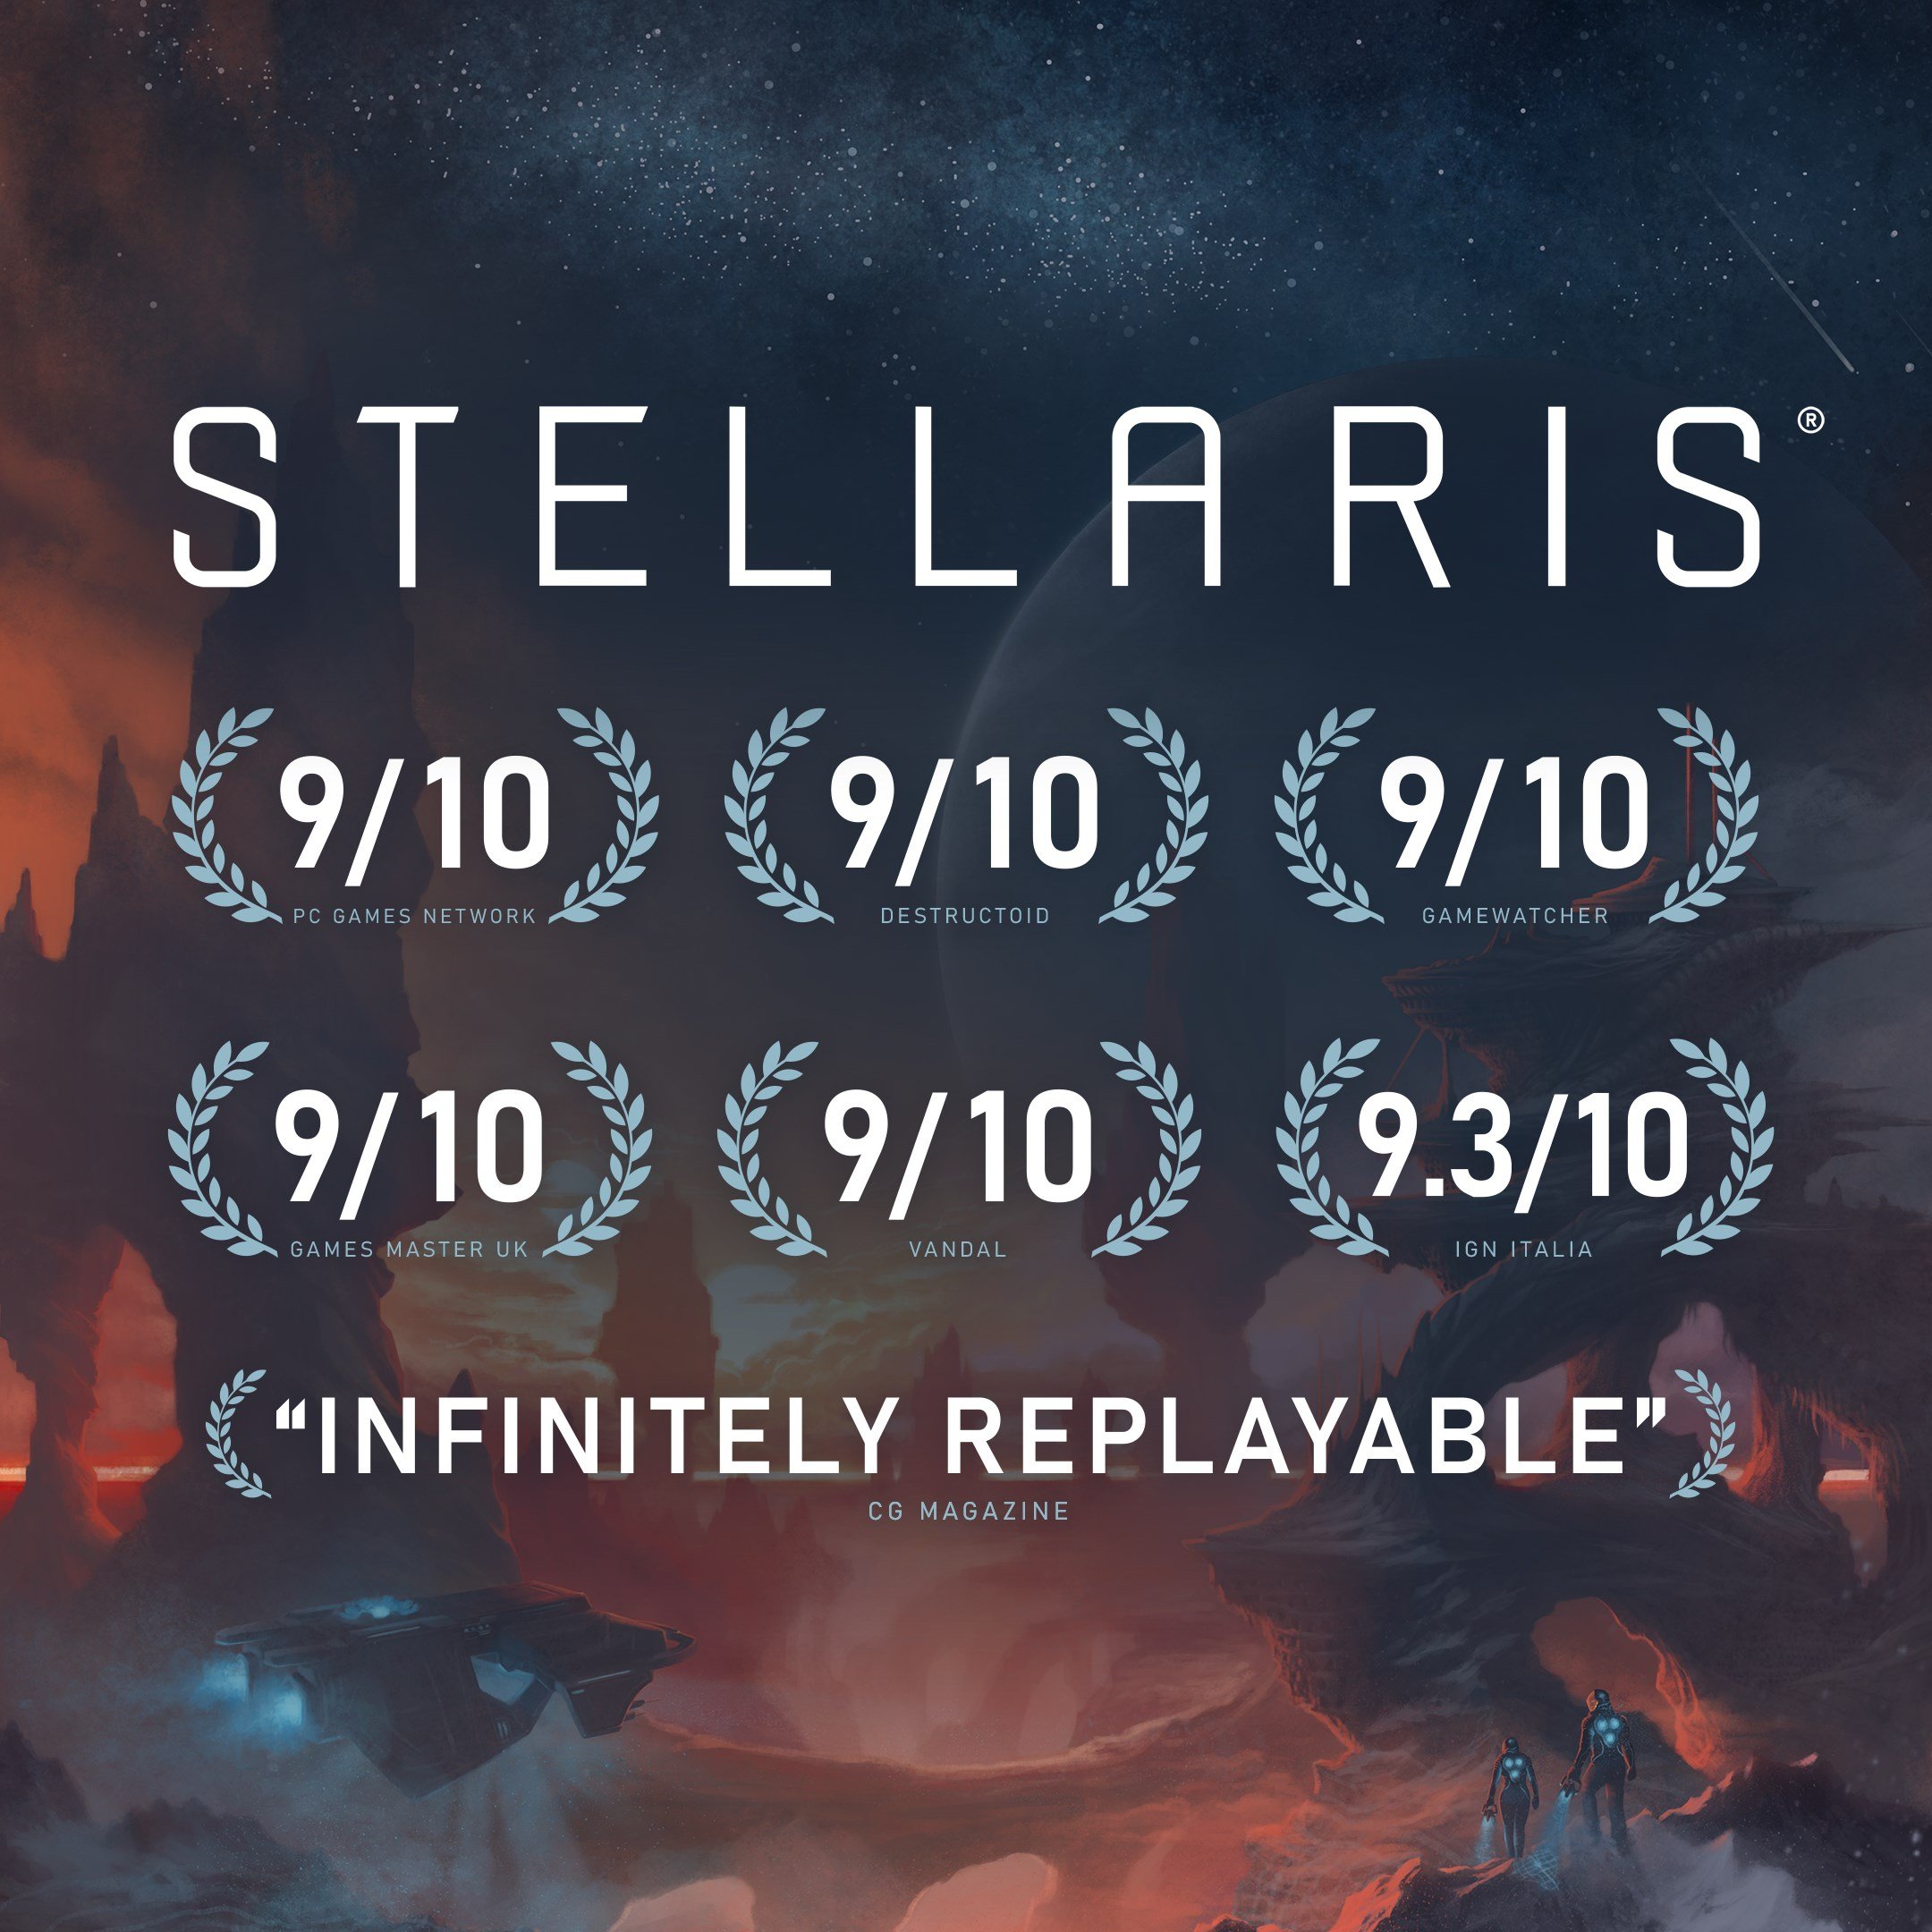 Stellaris 